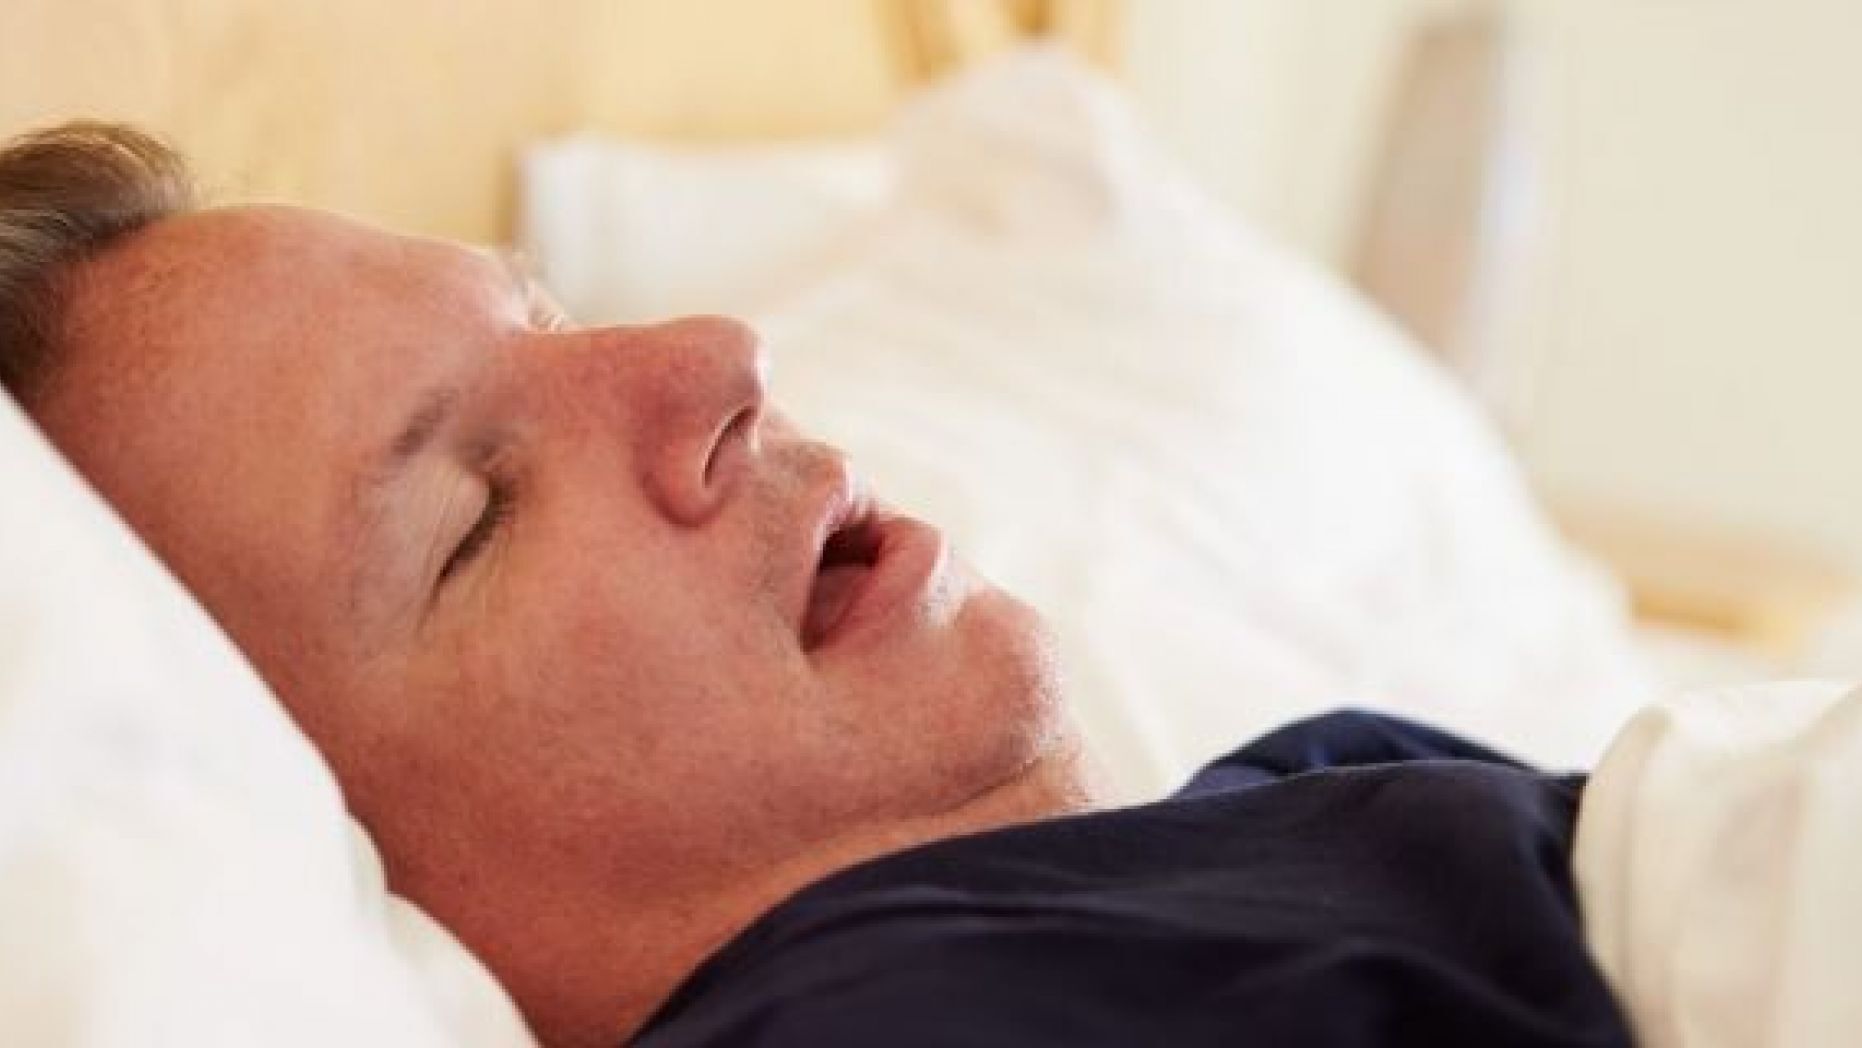 Diesel reccomend Teen sleep apnea if